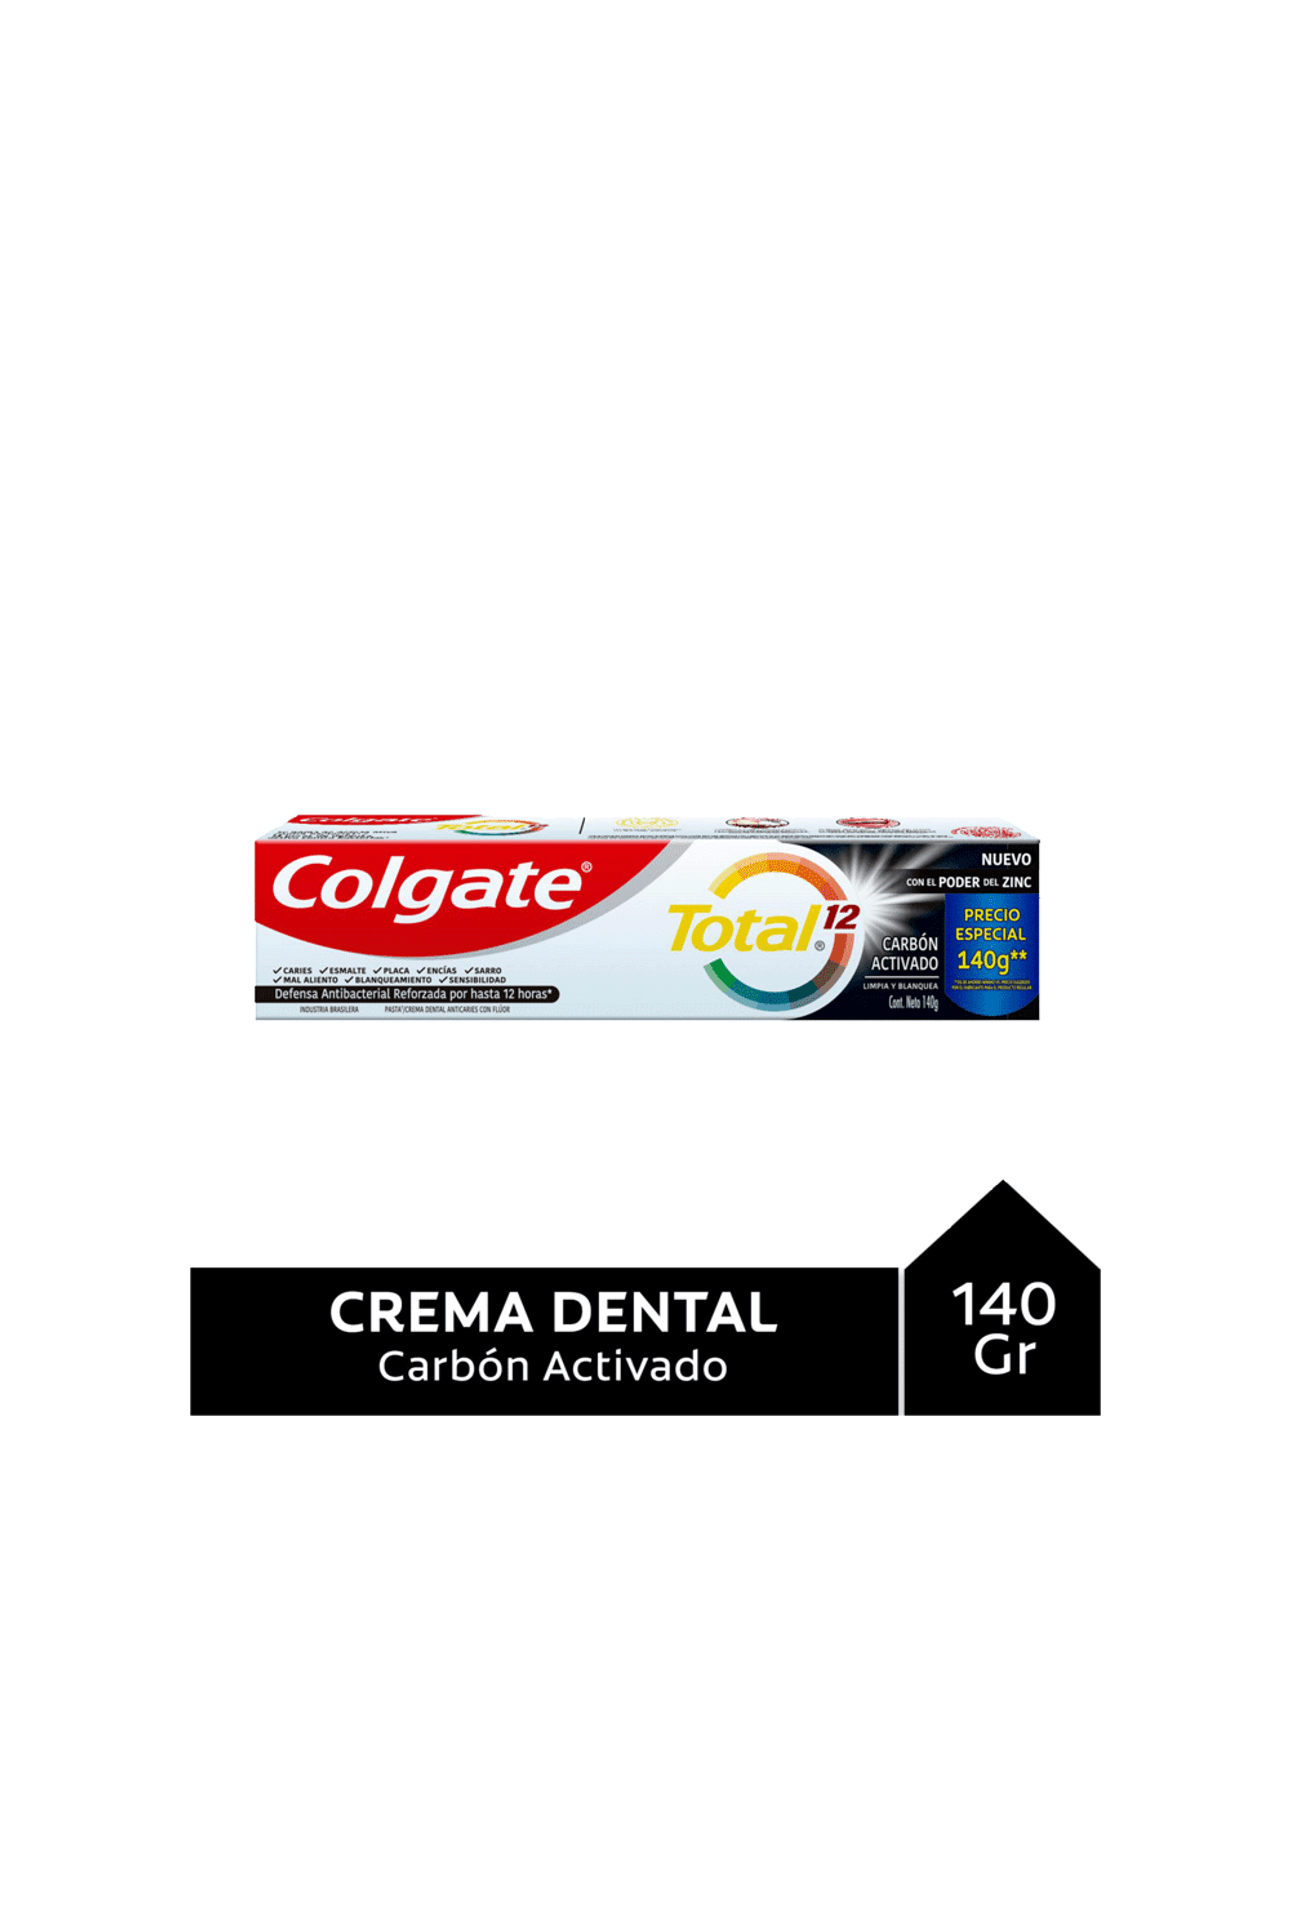 Colgate-Crema-Dental-Colgate-Total-12-Carbon-Activado-x-140-gr-7509546686035_img1